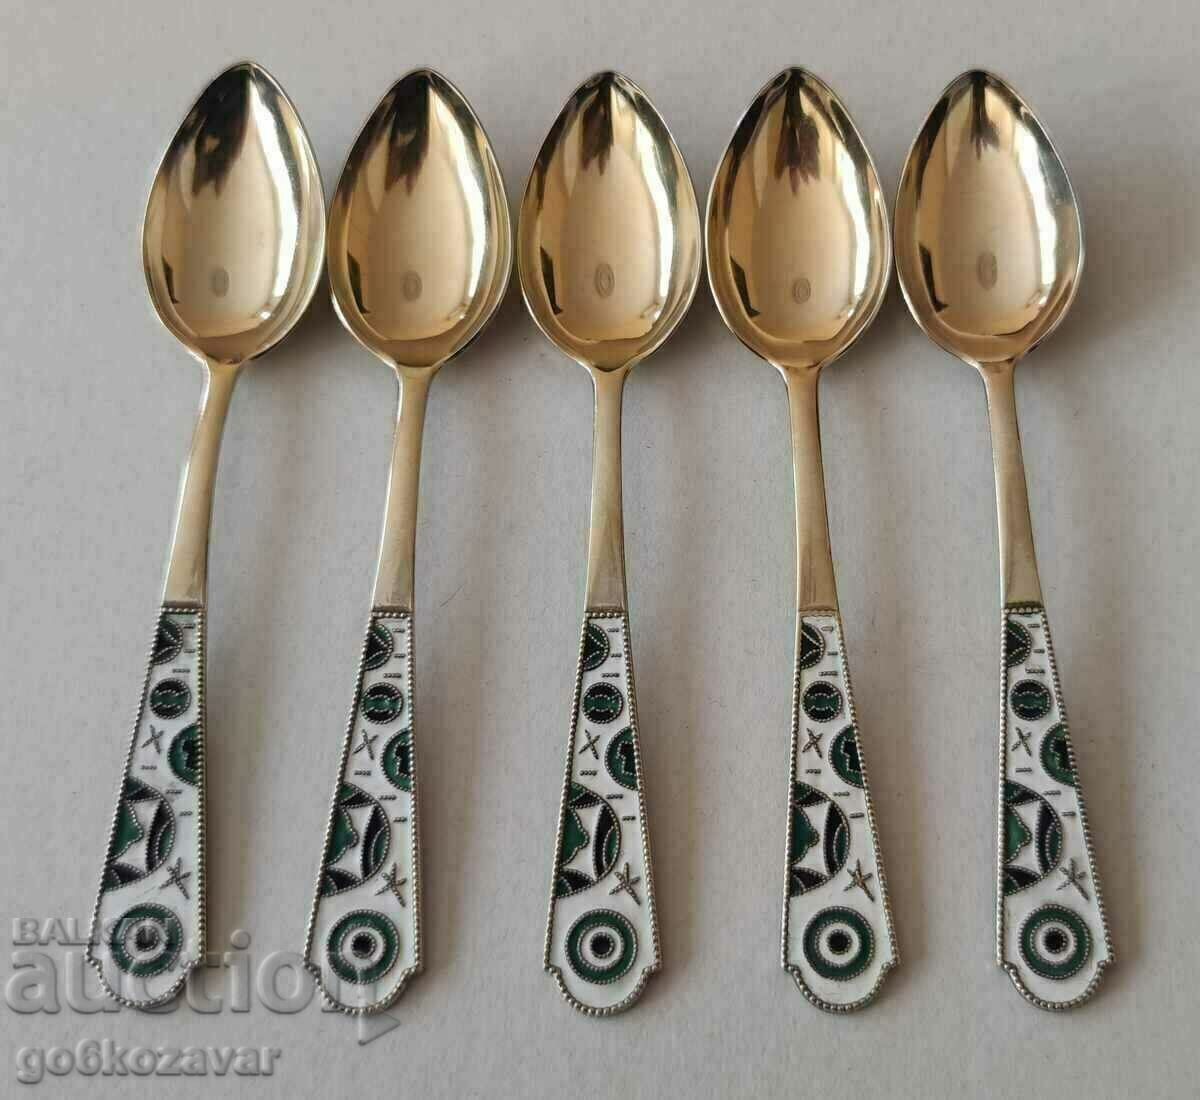 Silver spoons USSR-Russia Enamel-gilt Markings Perfect